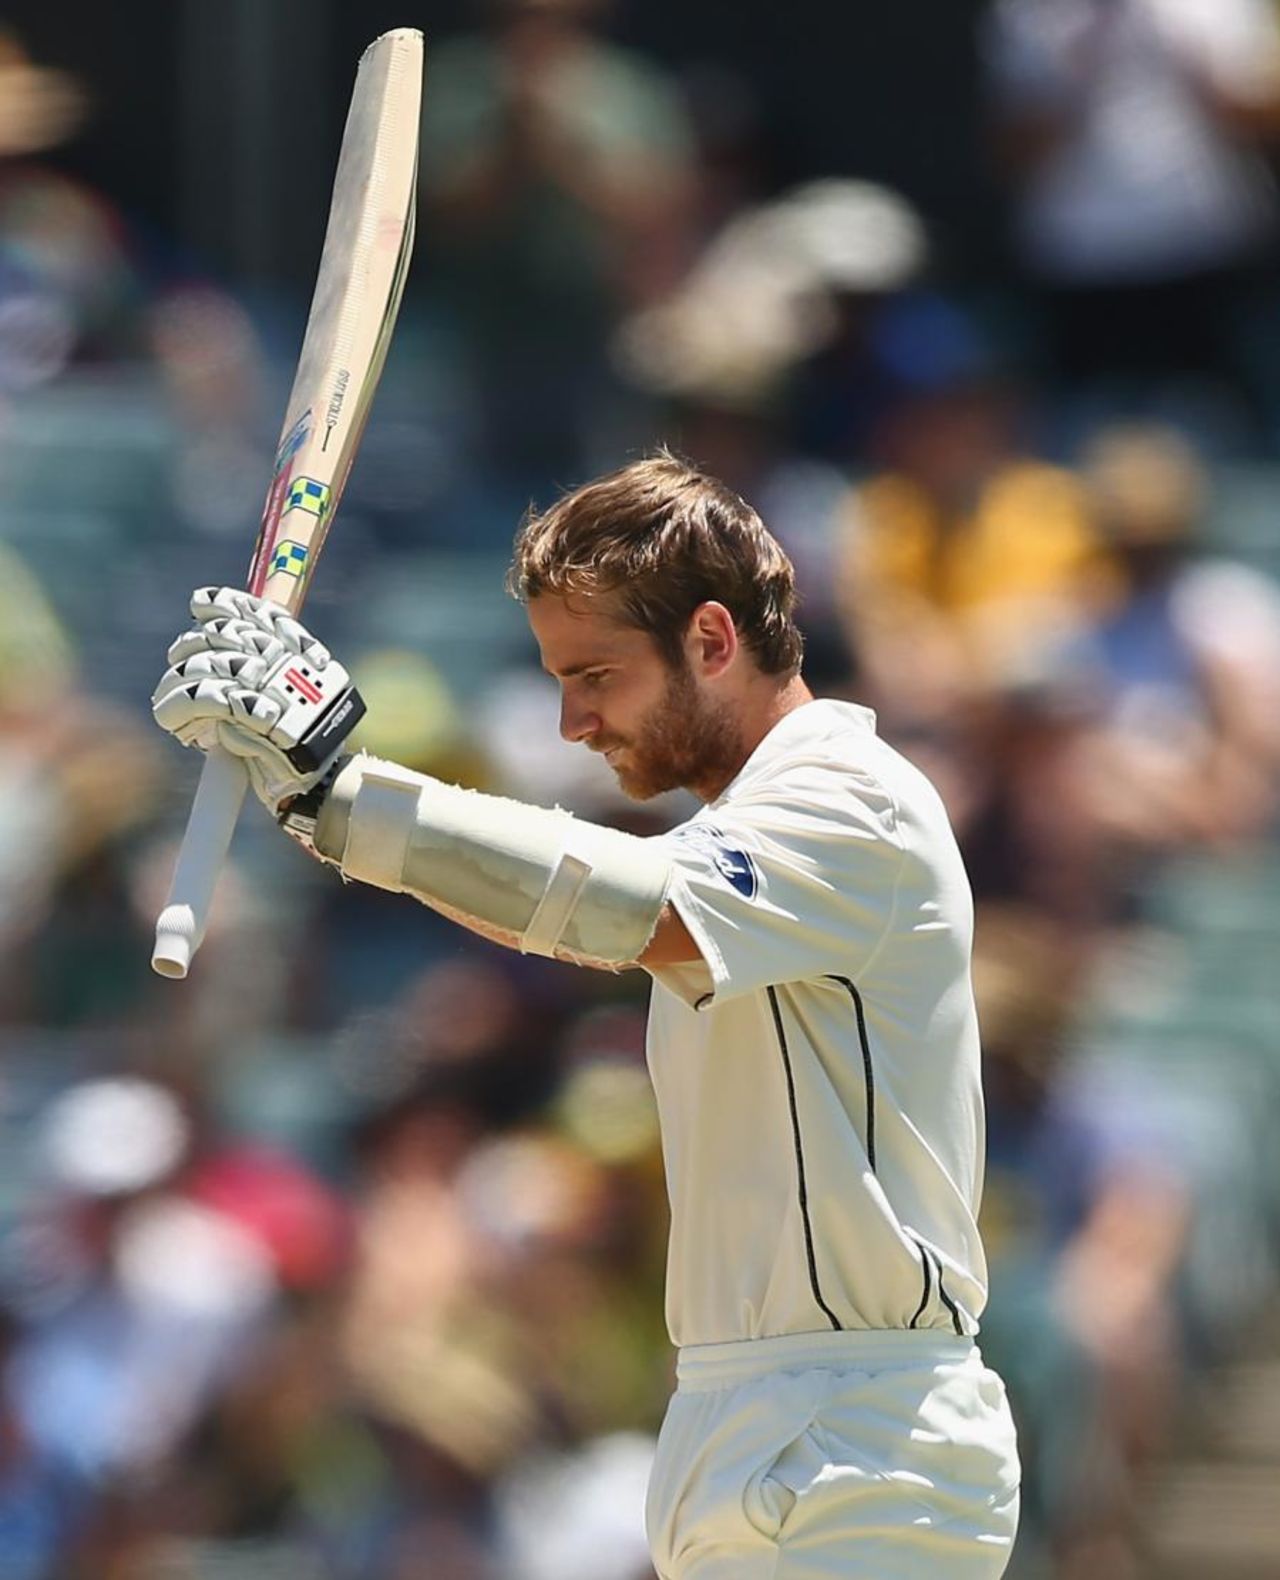 Kane Williamson raises his bat after scoring a century, Australia v New Zealand, 2nd Test, Perth, 3rd day, November 15, 2015